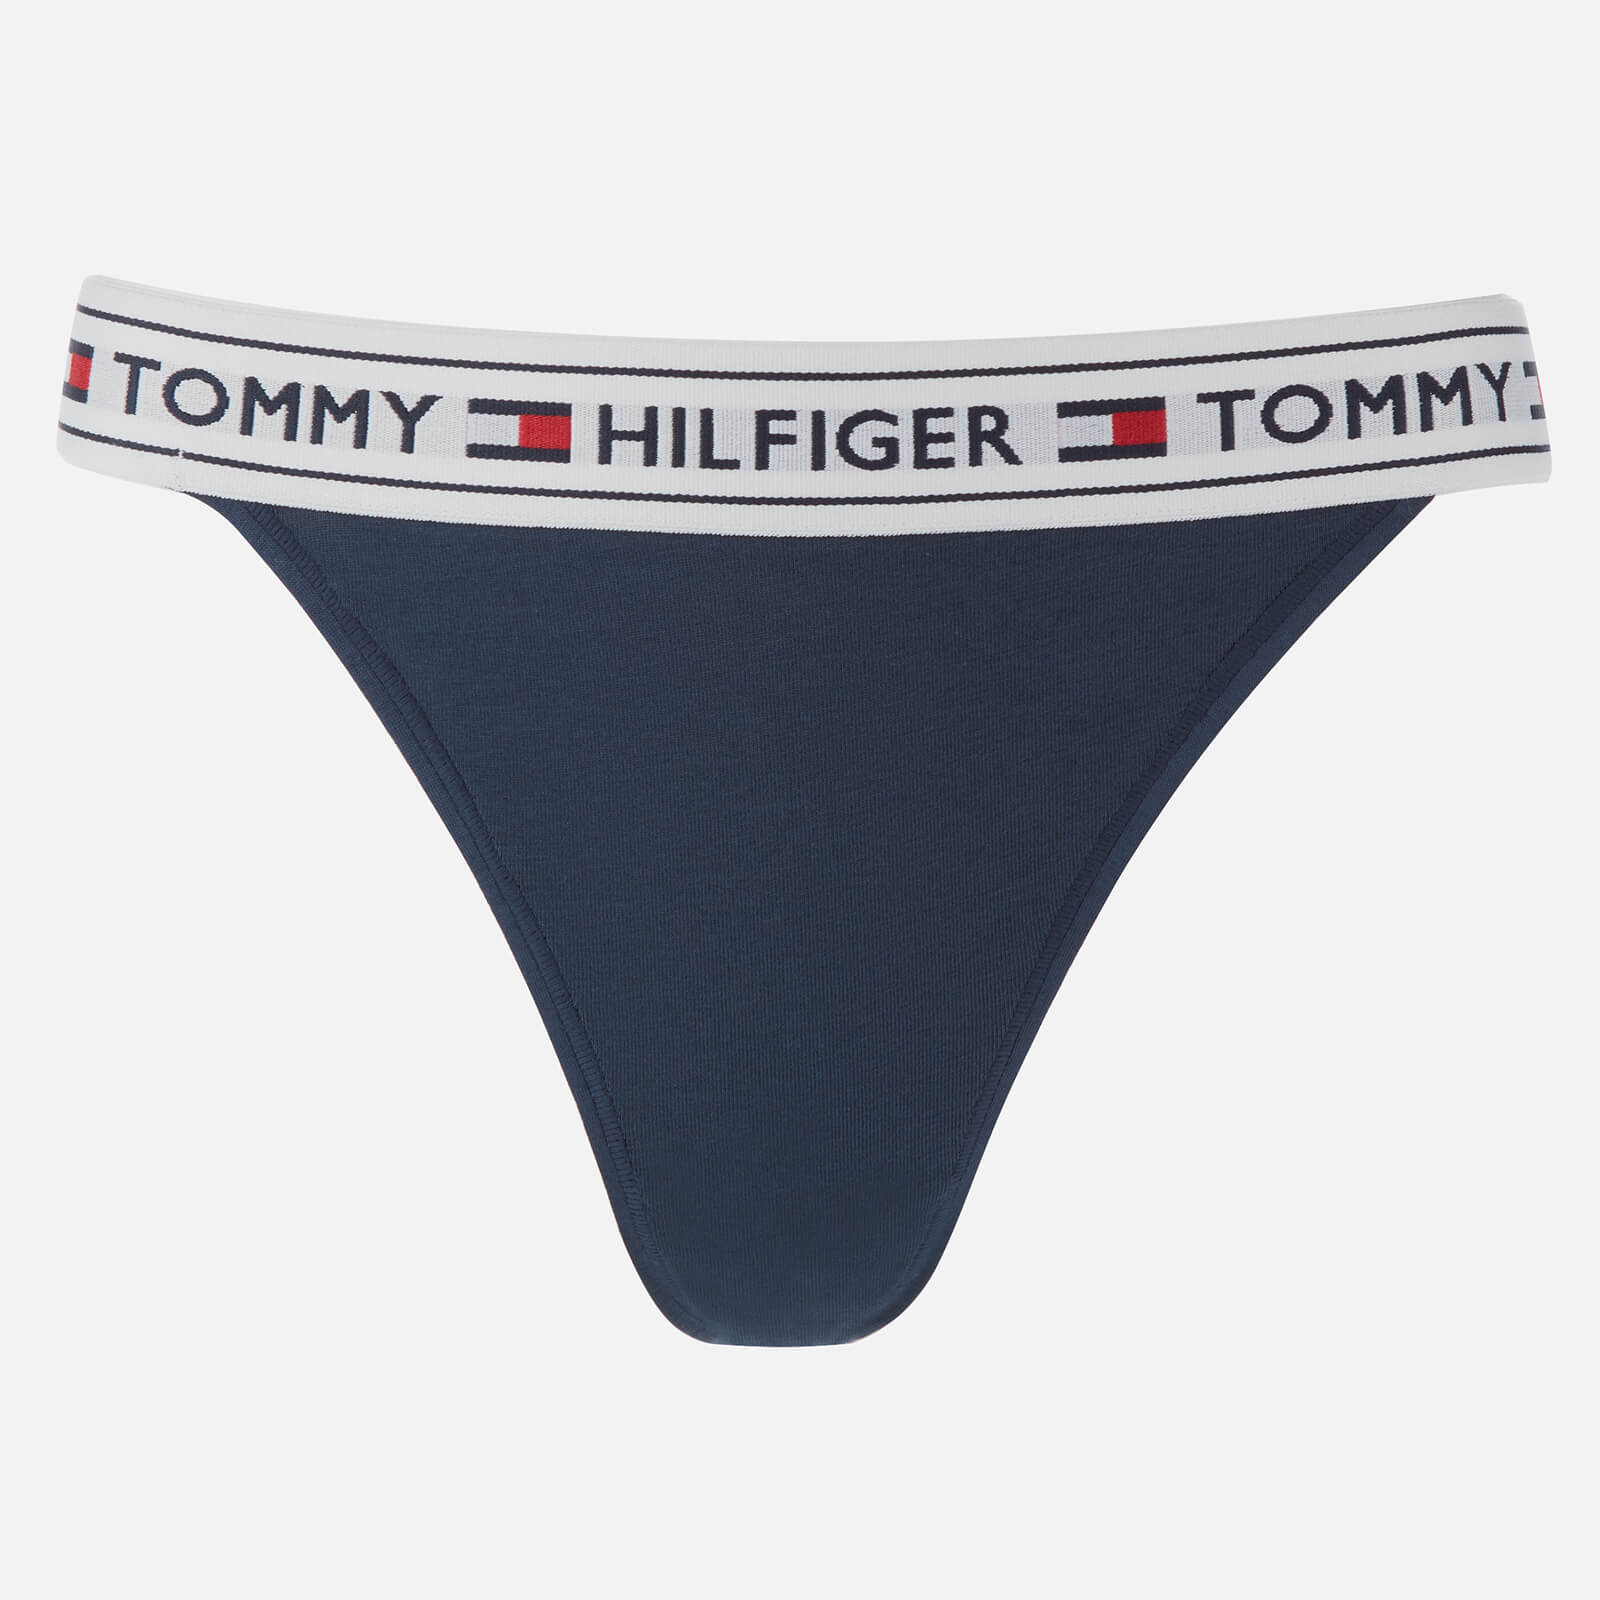 Tommy Hilfiger Bikini Navy Hotsell, 52% OFF | espirituviajero.com